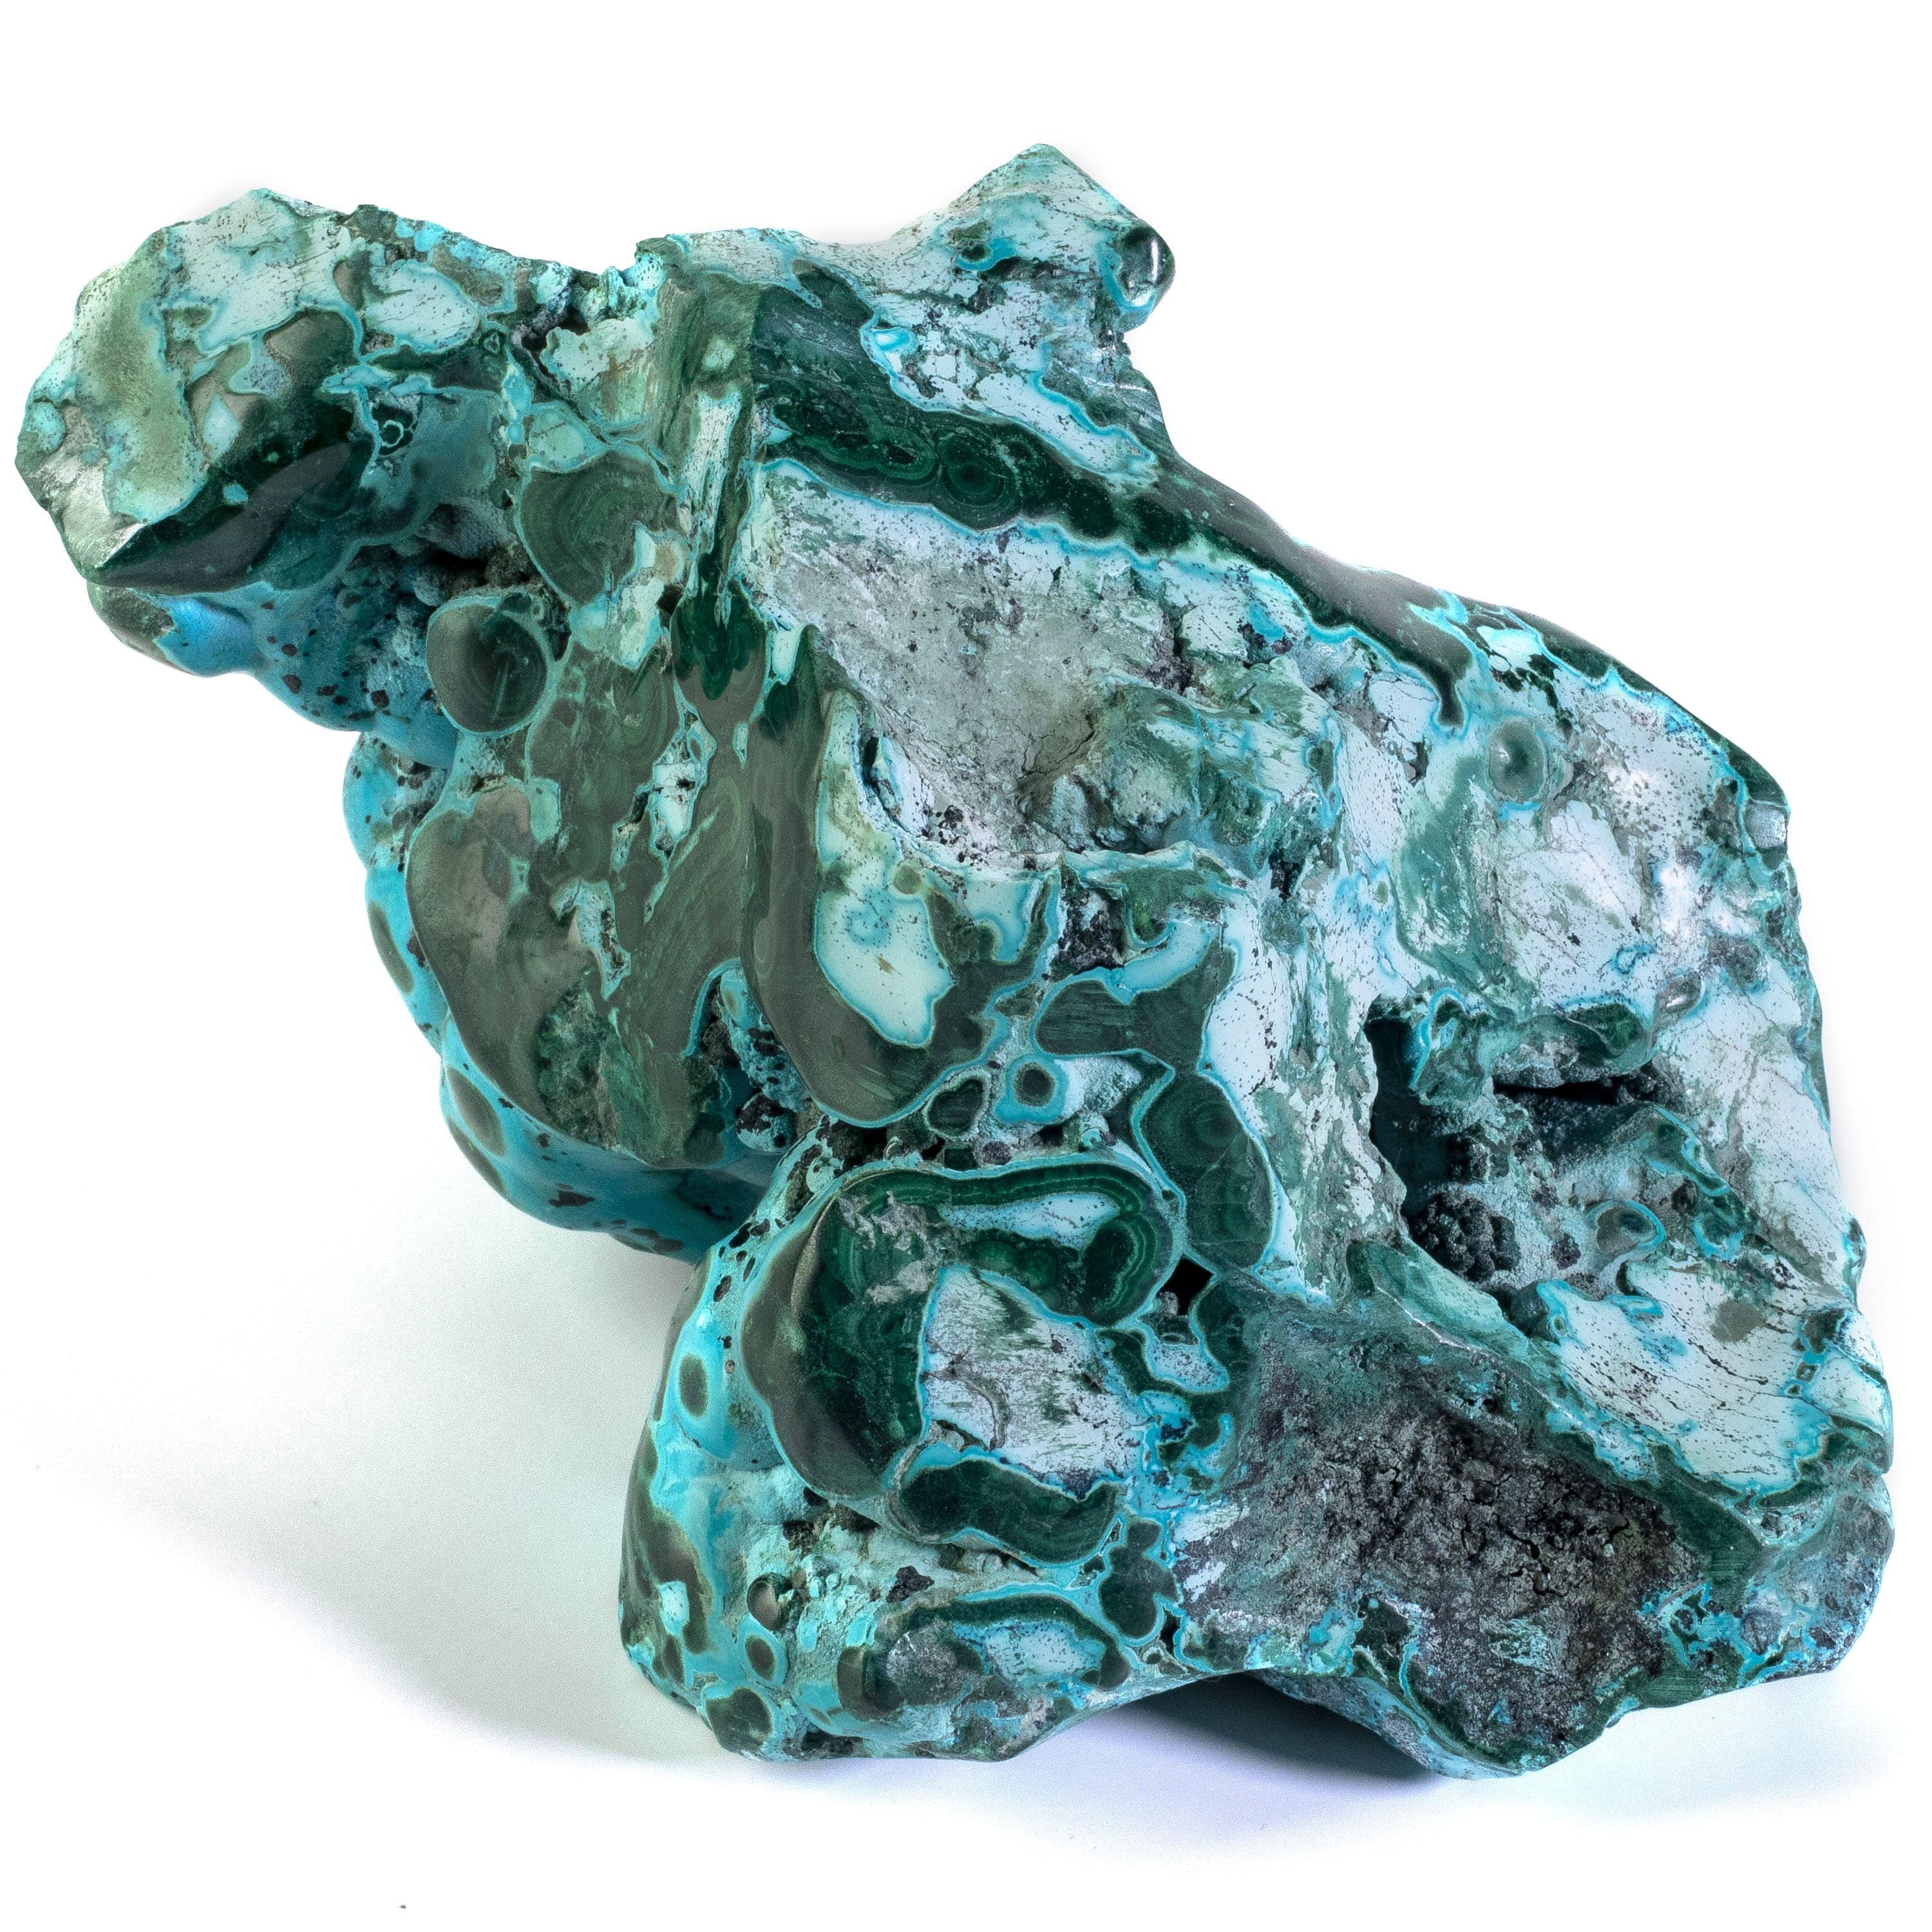 Kalifano Malachite Rare Natural Green Malachite with Blue Chrysocolla Freeform Specimen from Congo - 1.9 kg / 4.1 lbs MAC1700.002